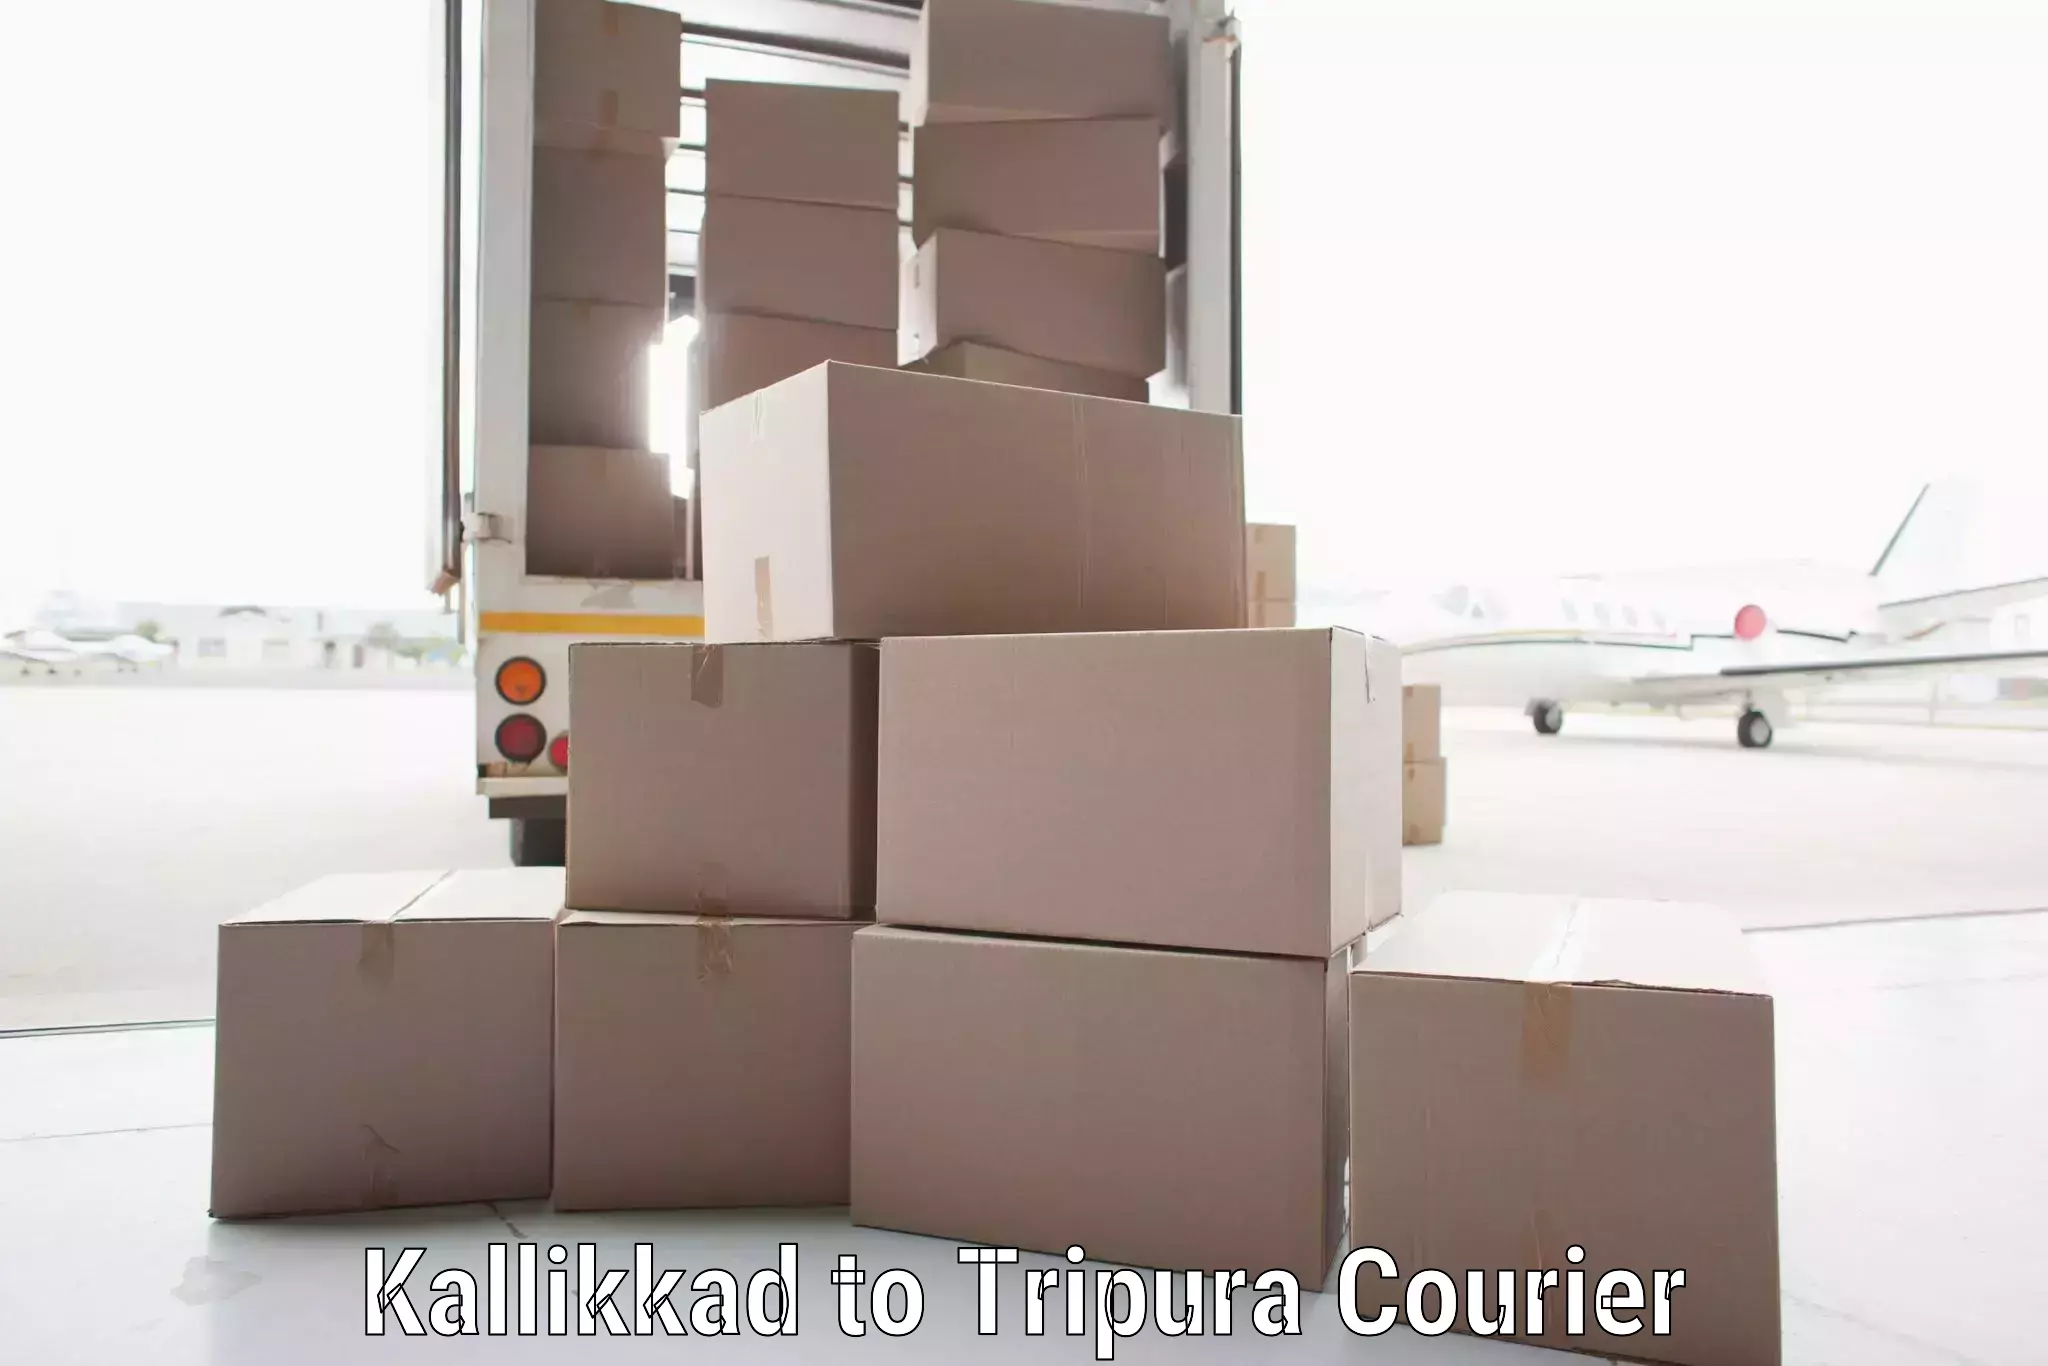 Express delivery capabilities Kallikkad to Udaipur Tripura